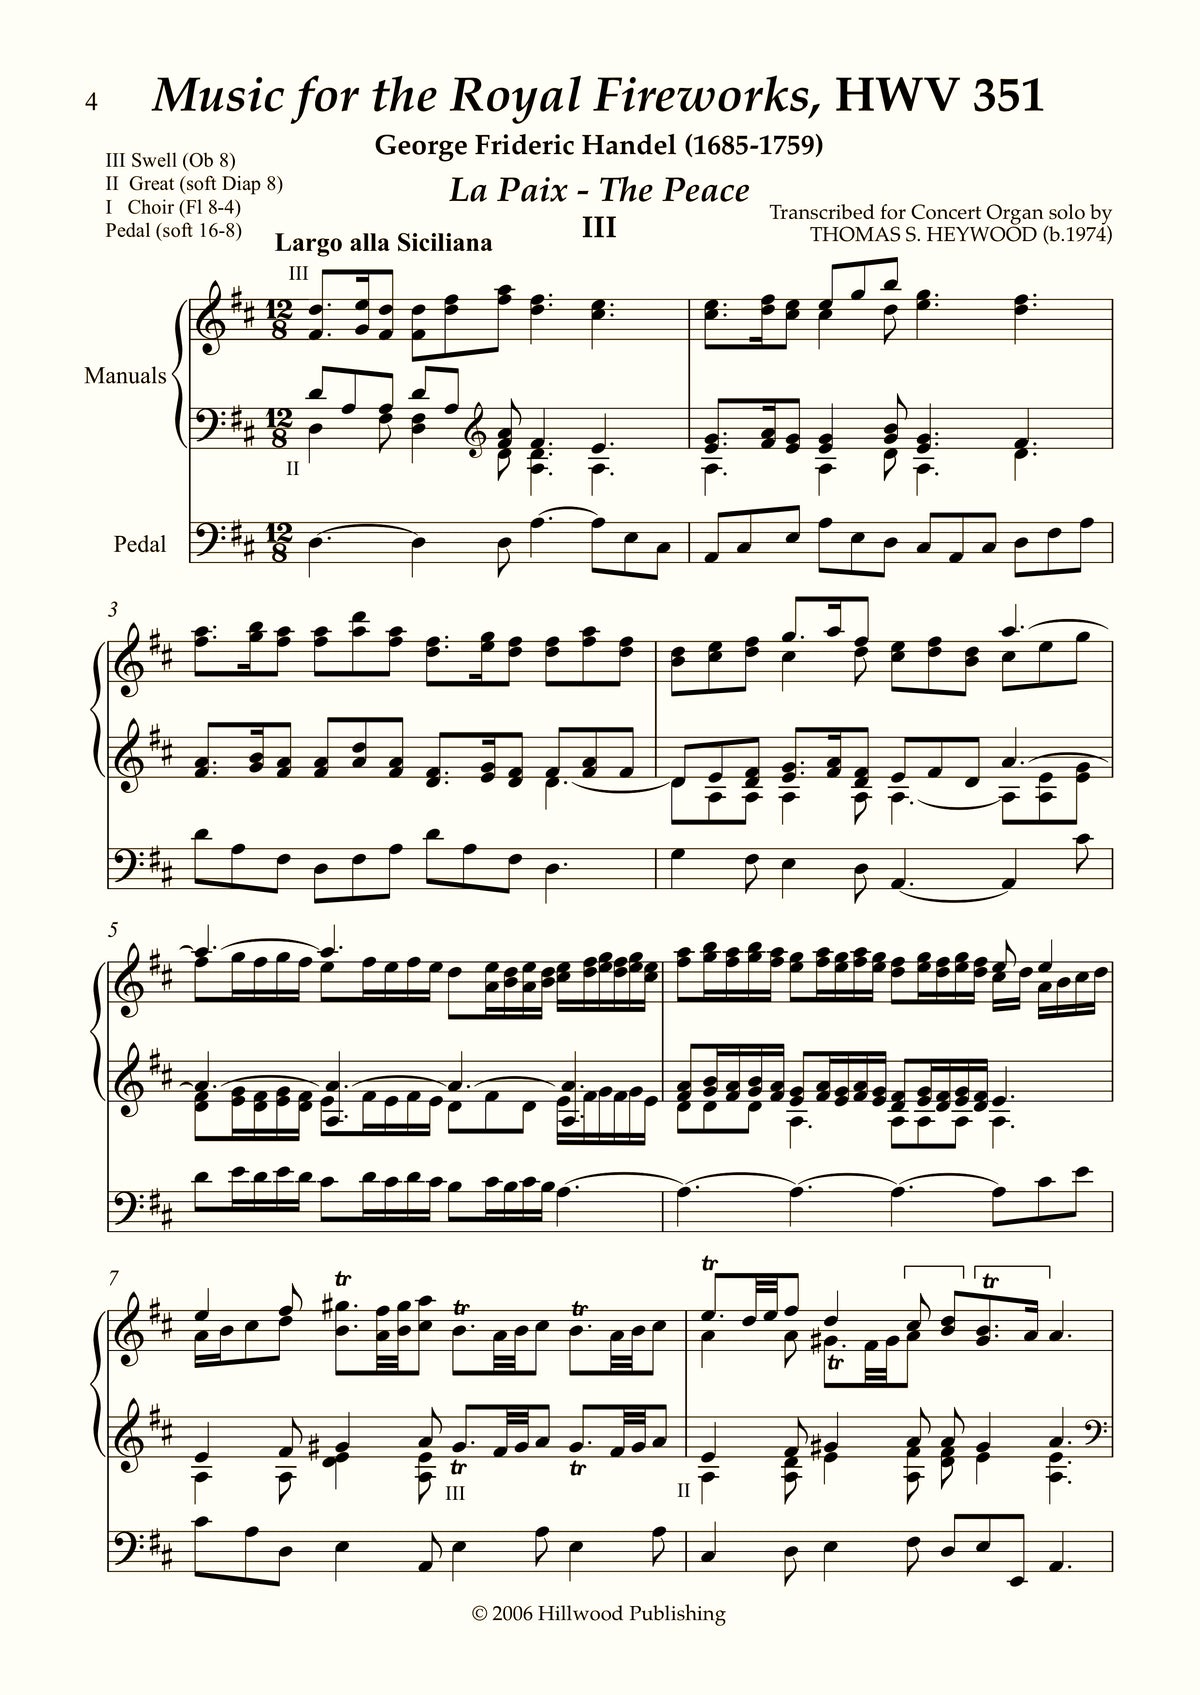 Handel/Heywood - The Peace from Music for the Royal Fireworks, HWV 351 (Score) | Thomas Heywood | Concert Organ International